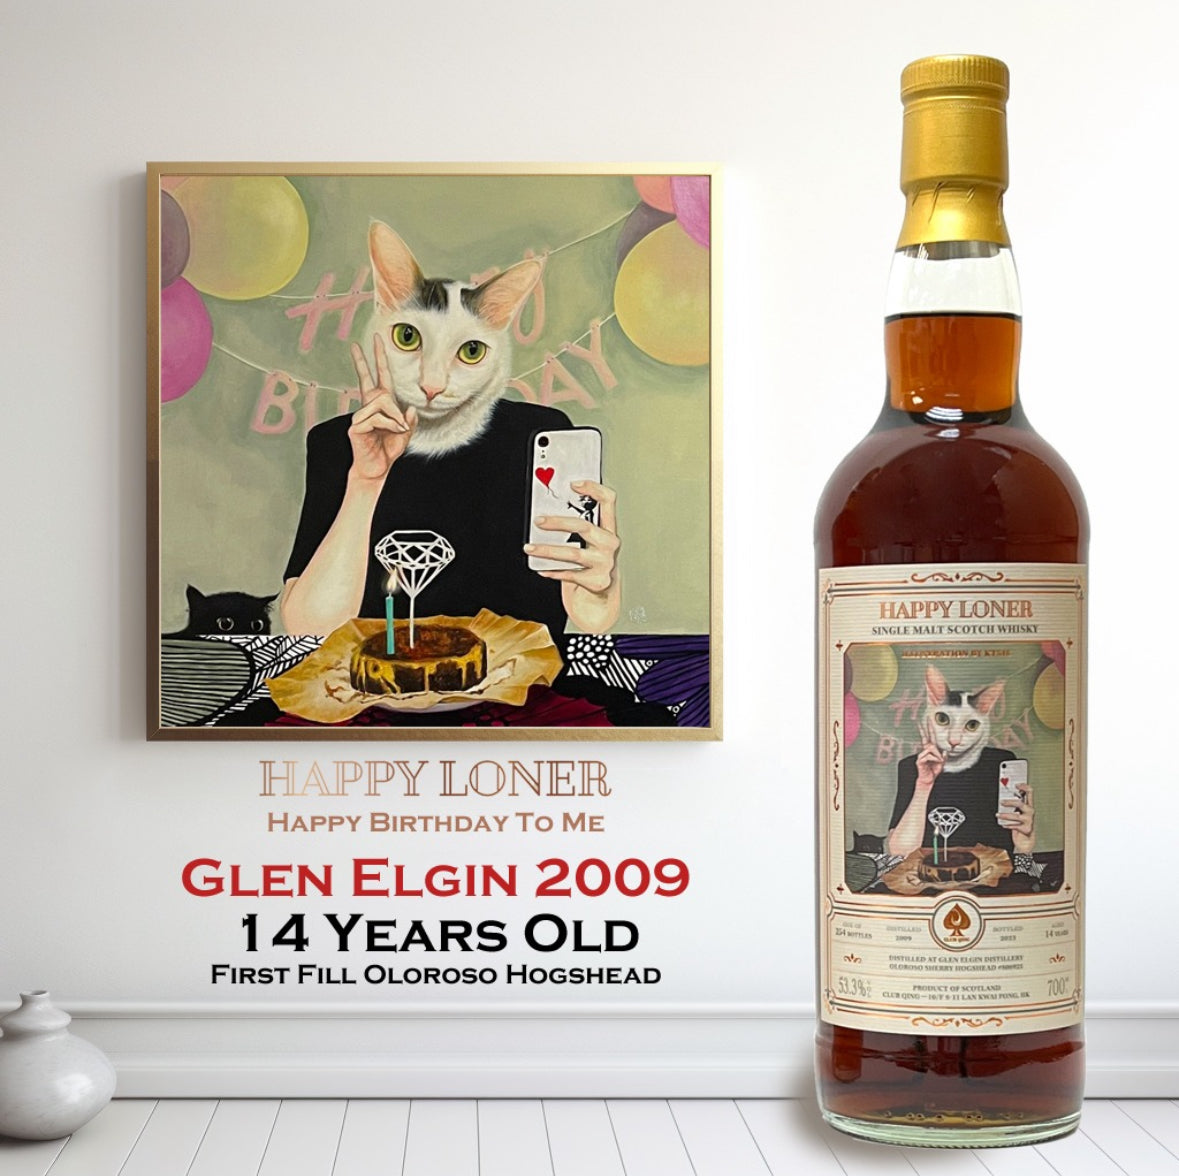 Glen Elgin 14 Year Old 2009 “Happy Loner #2 - Happy Birthday to Me” by Club Qing Single Malt Scotch Whisky